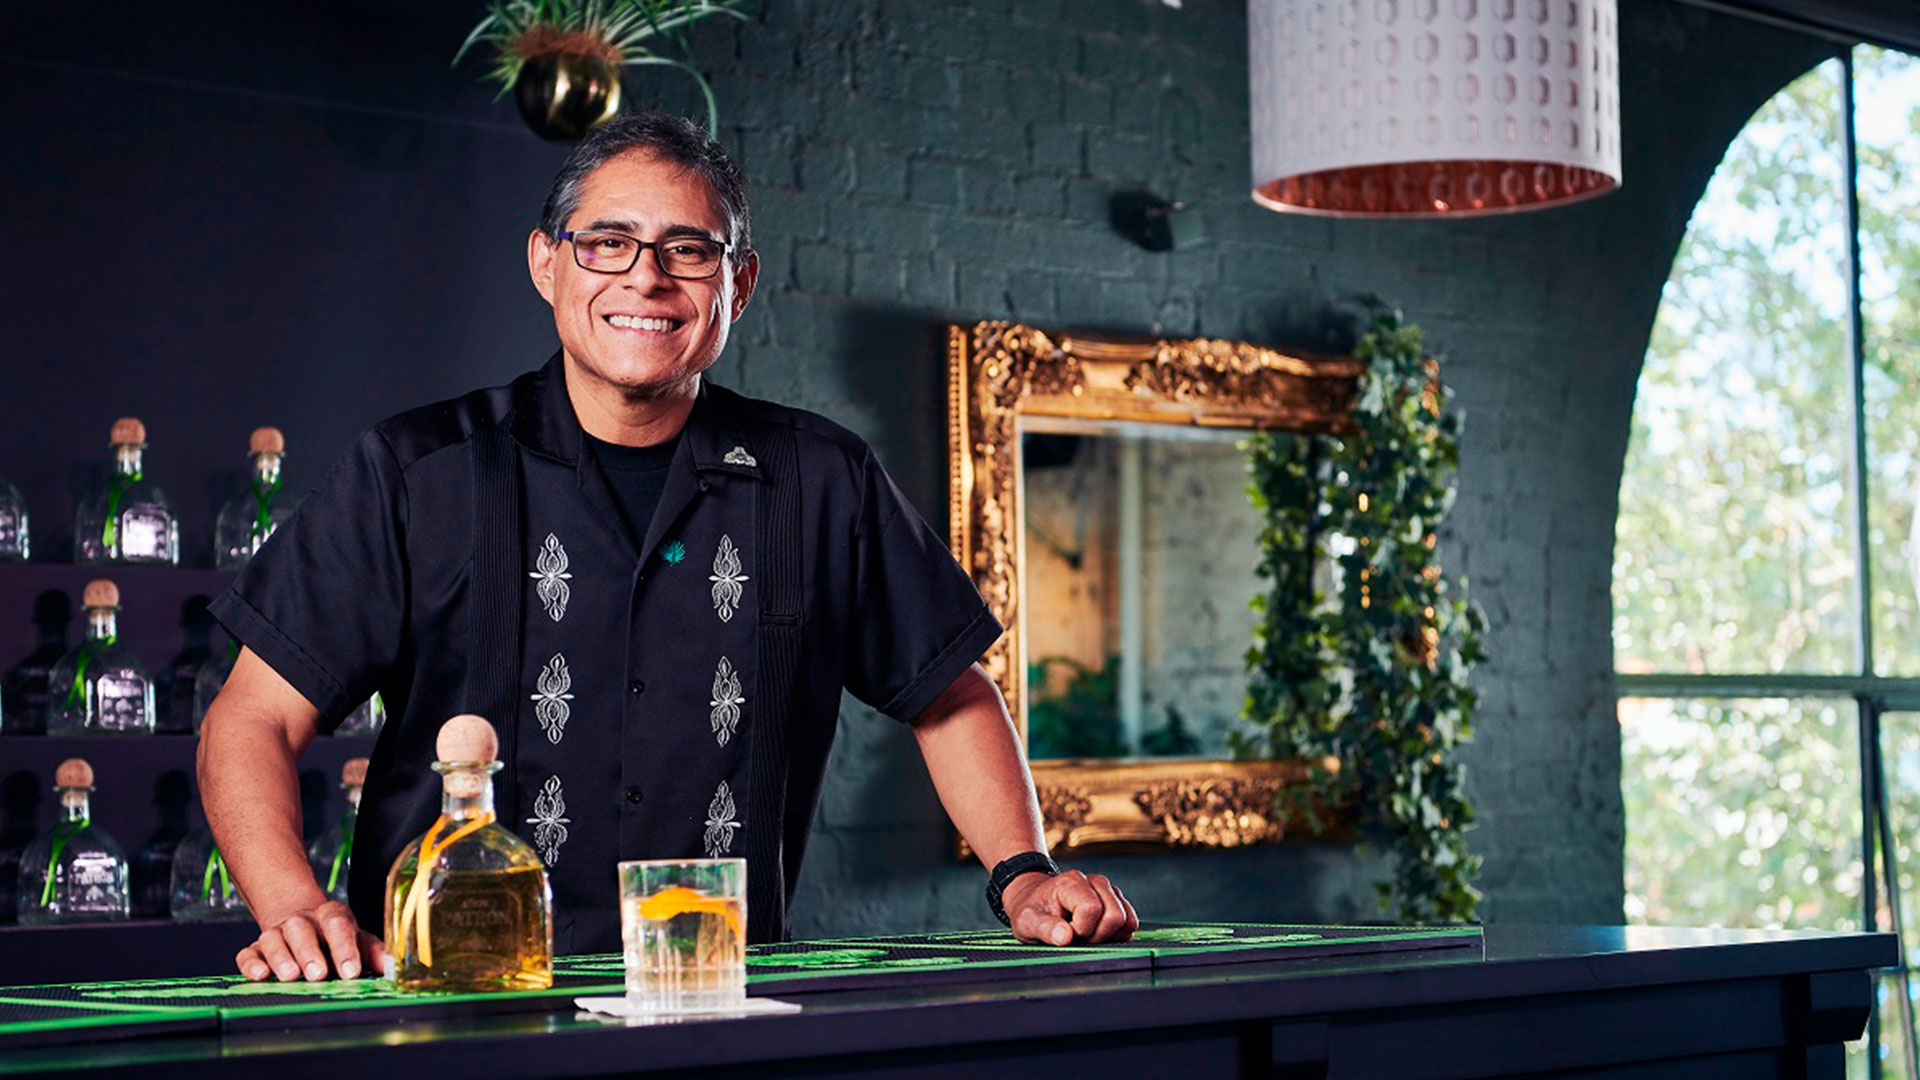 Julio-Bermejo-bartender tommy's margarita tequila